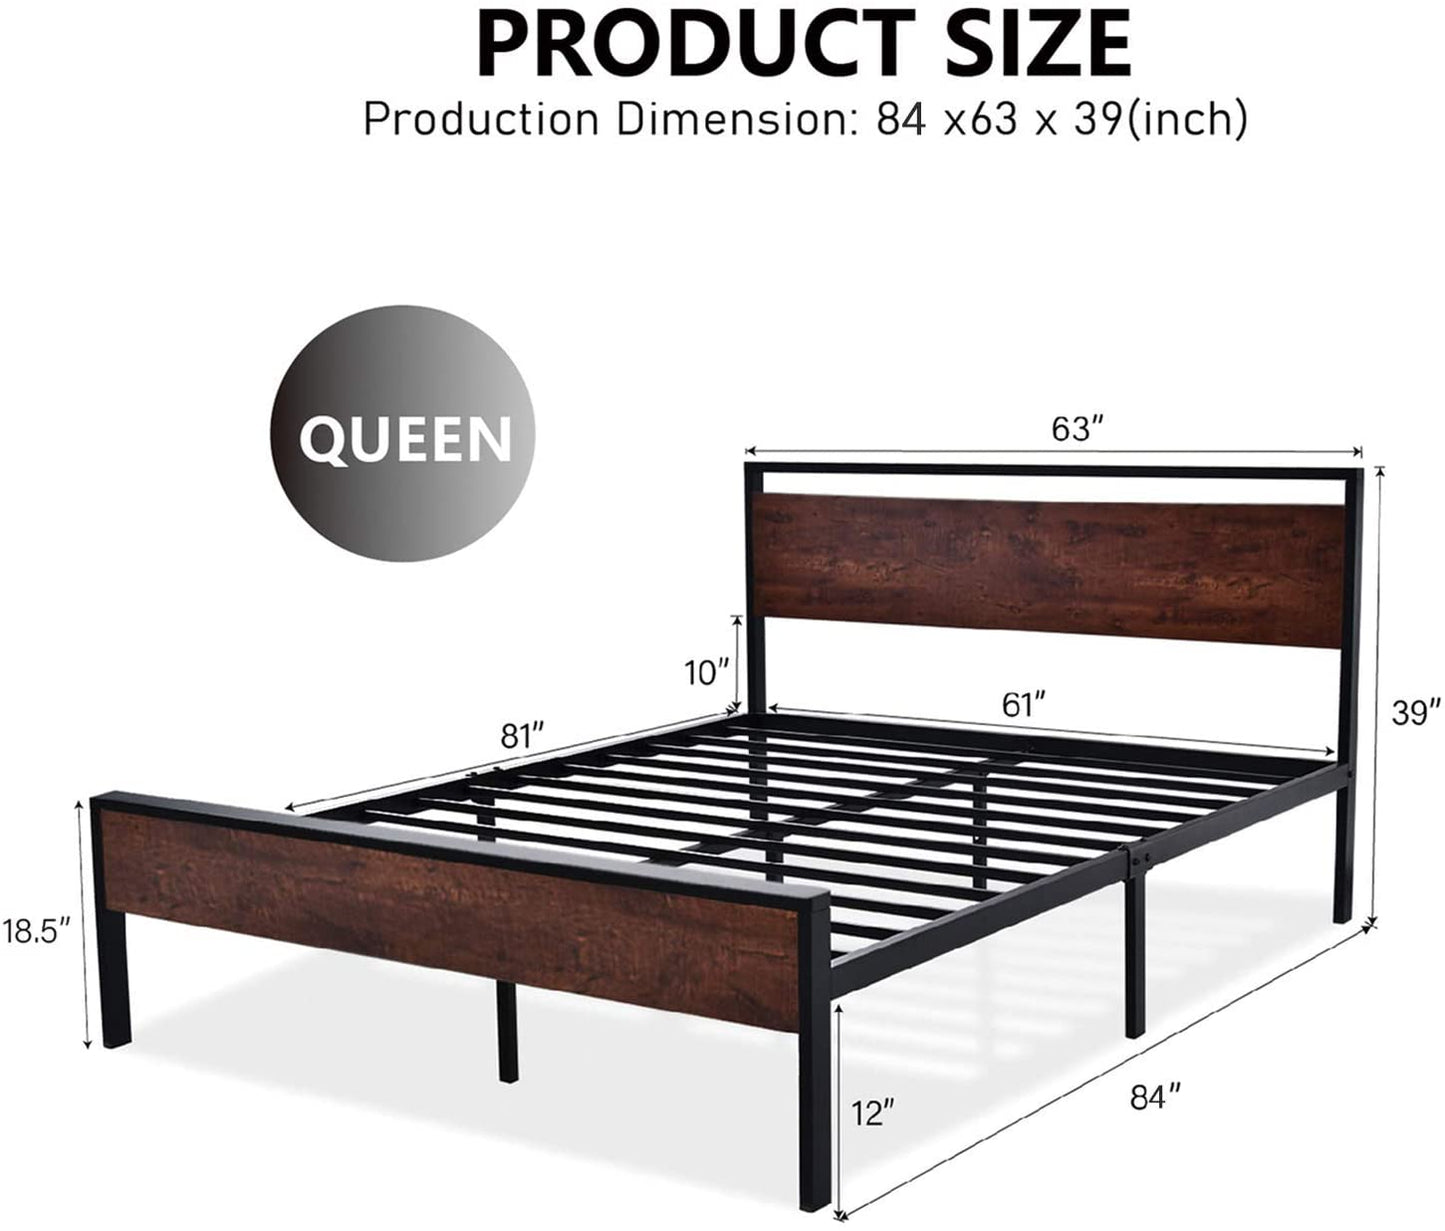 Allewie Sanders Platform Bed Frame with Wood Headboard and Footboard, Heavy Duty Metal Slat